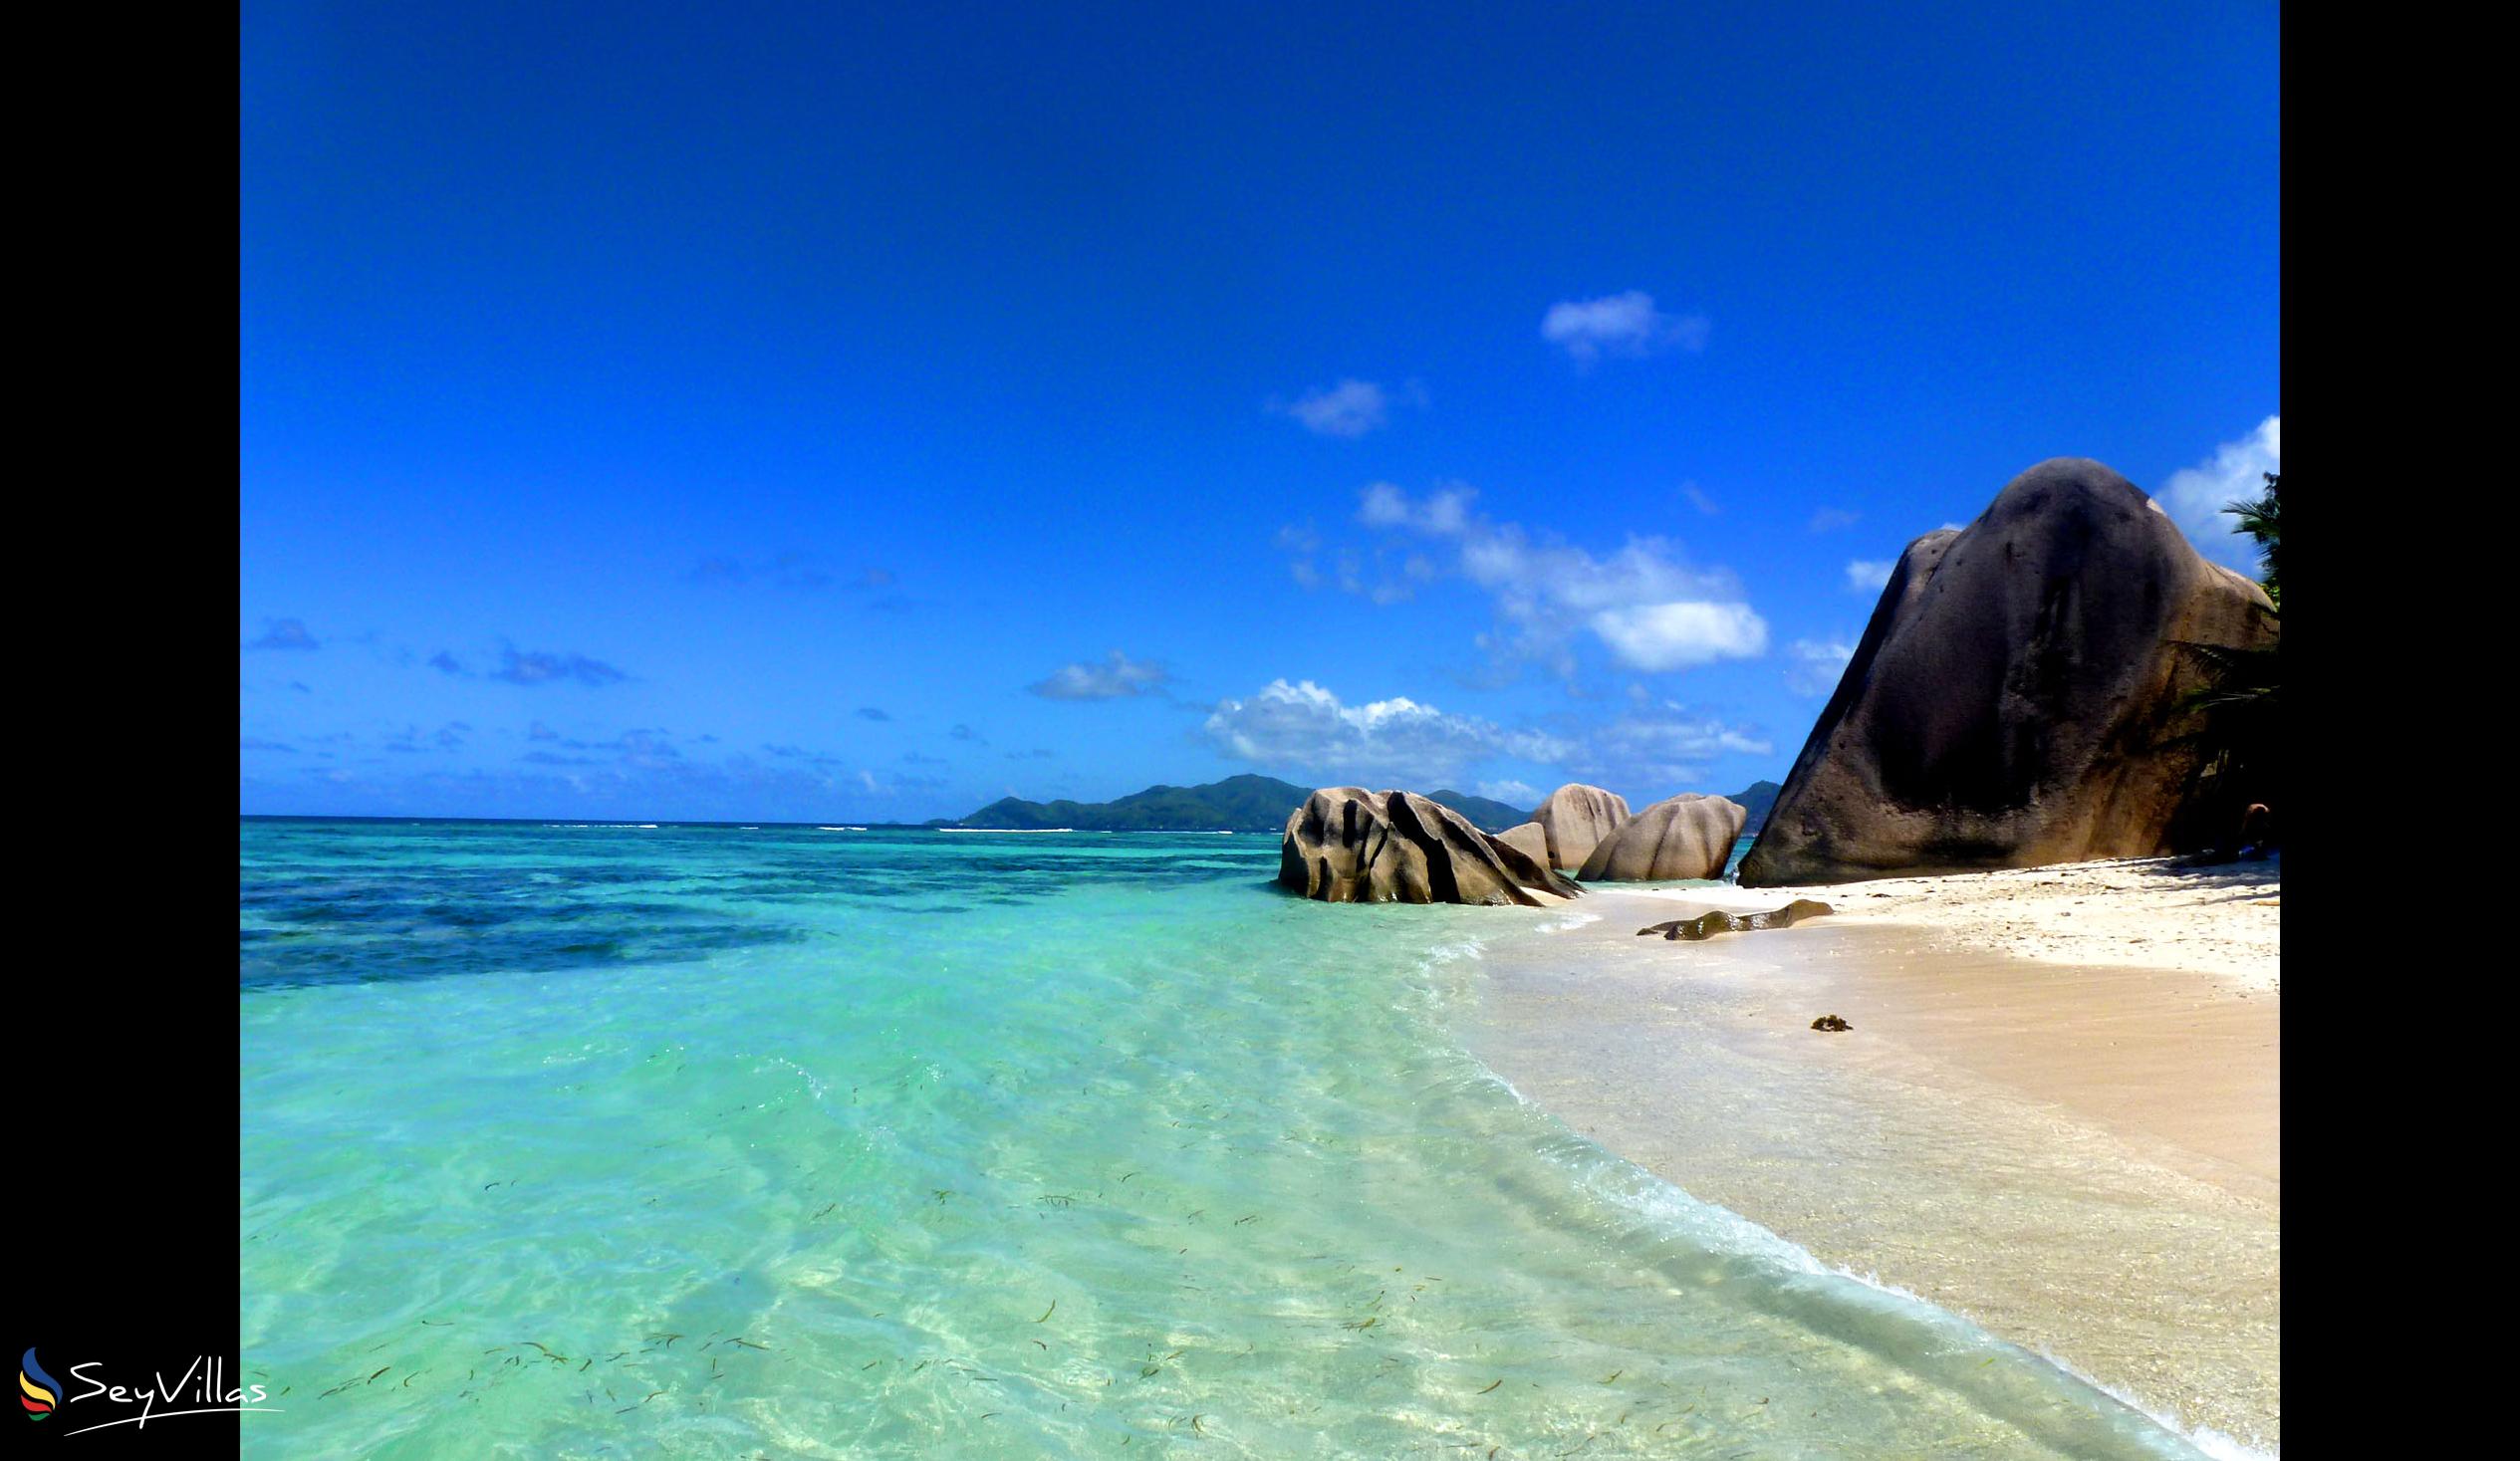 Photo 35: Le Relax Beach House - Beaches - La Digue (Seychelles)